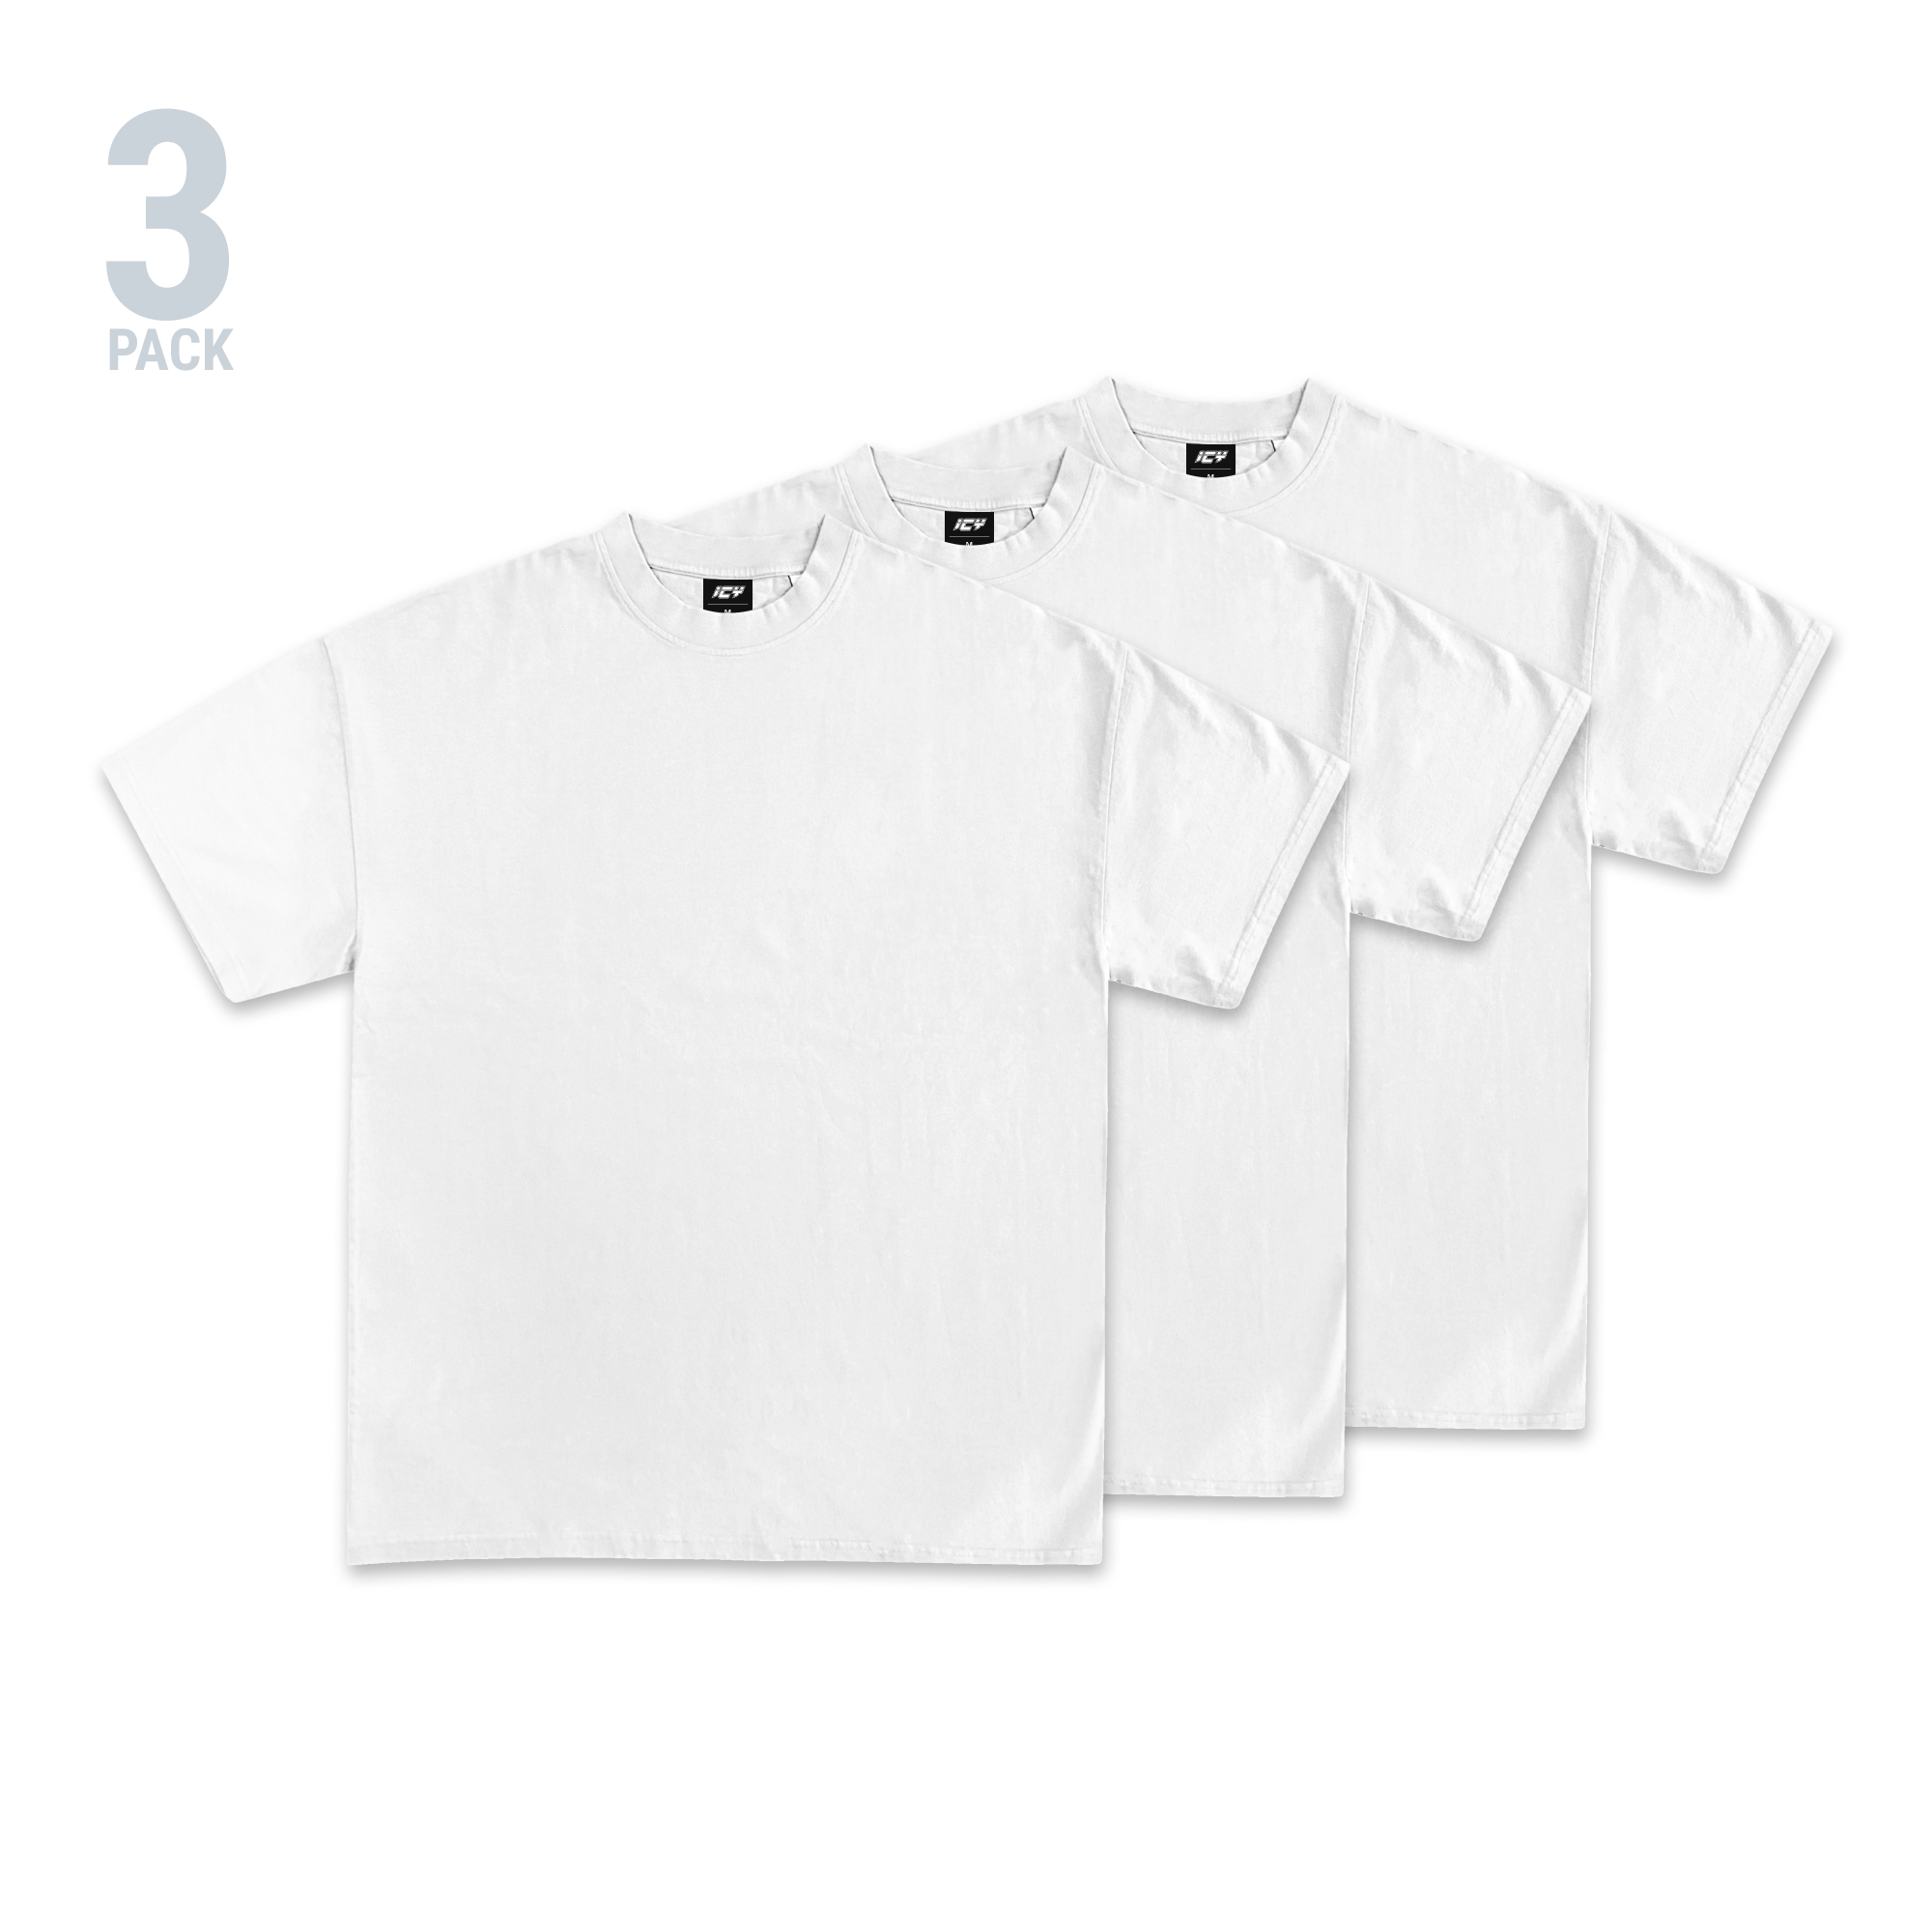 Icy Men's 3-Pack Heavyweight Blank T-Shirt (White)